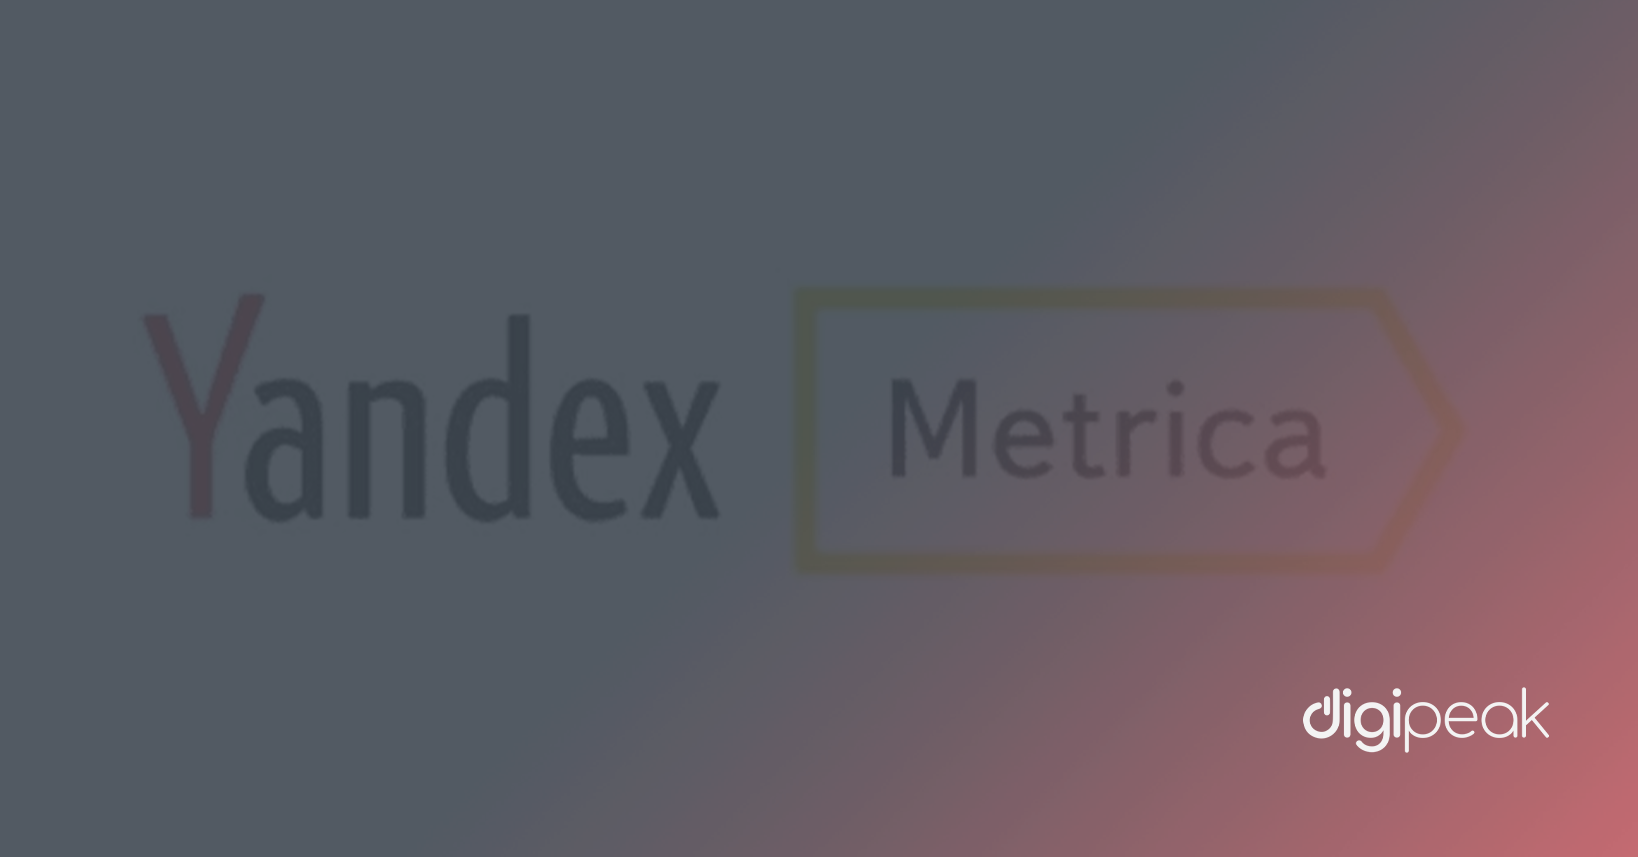 Yandex Metrica Banner